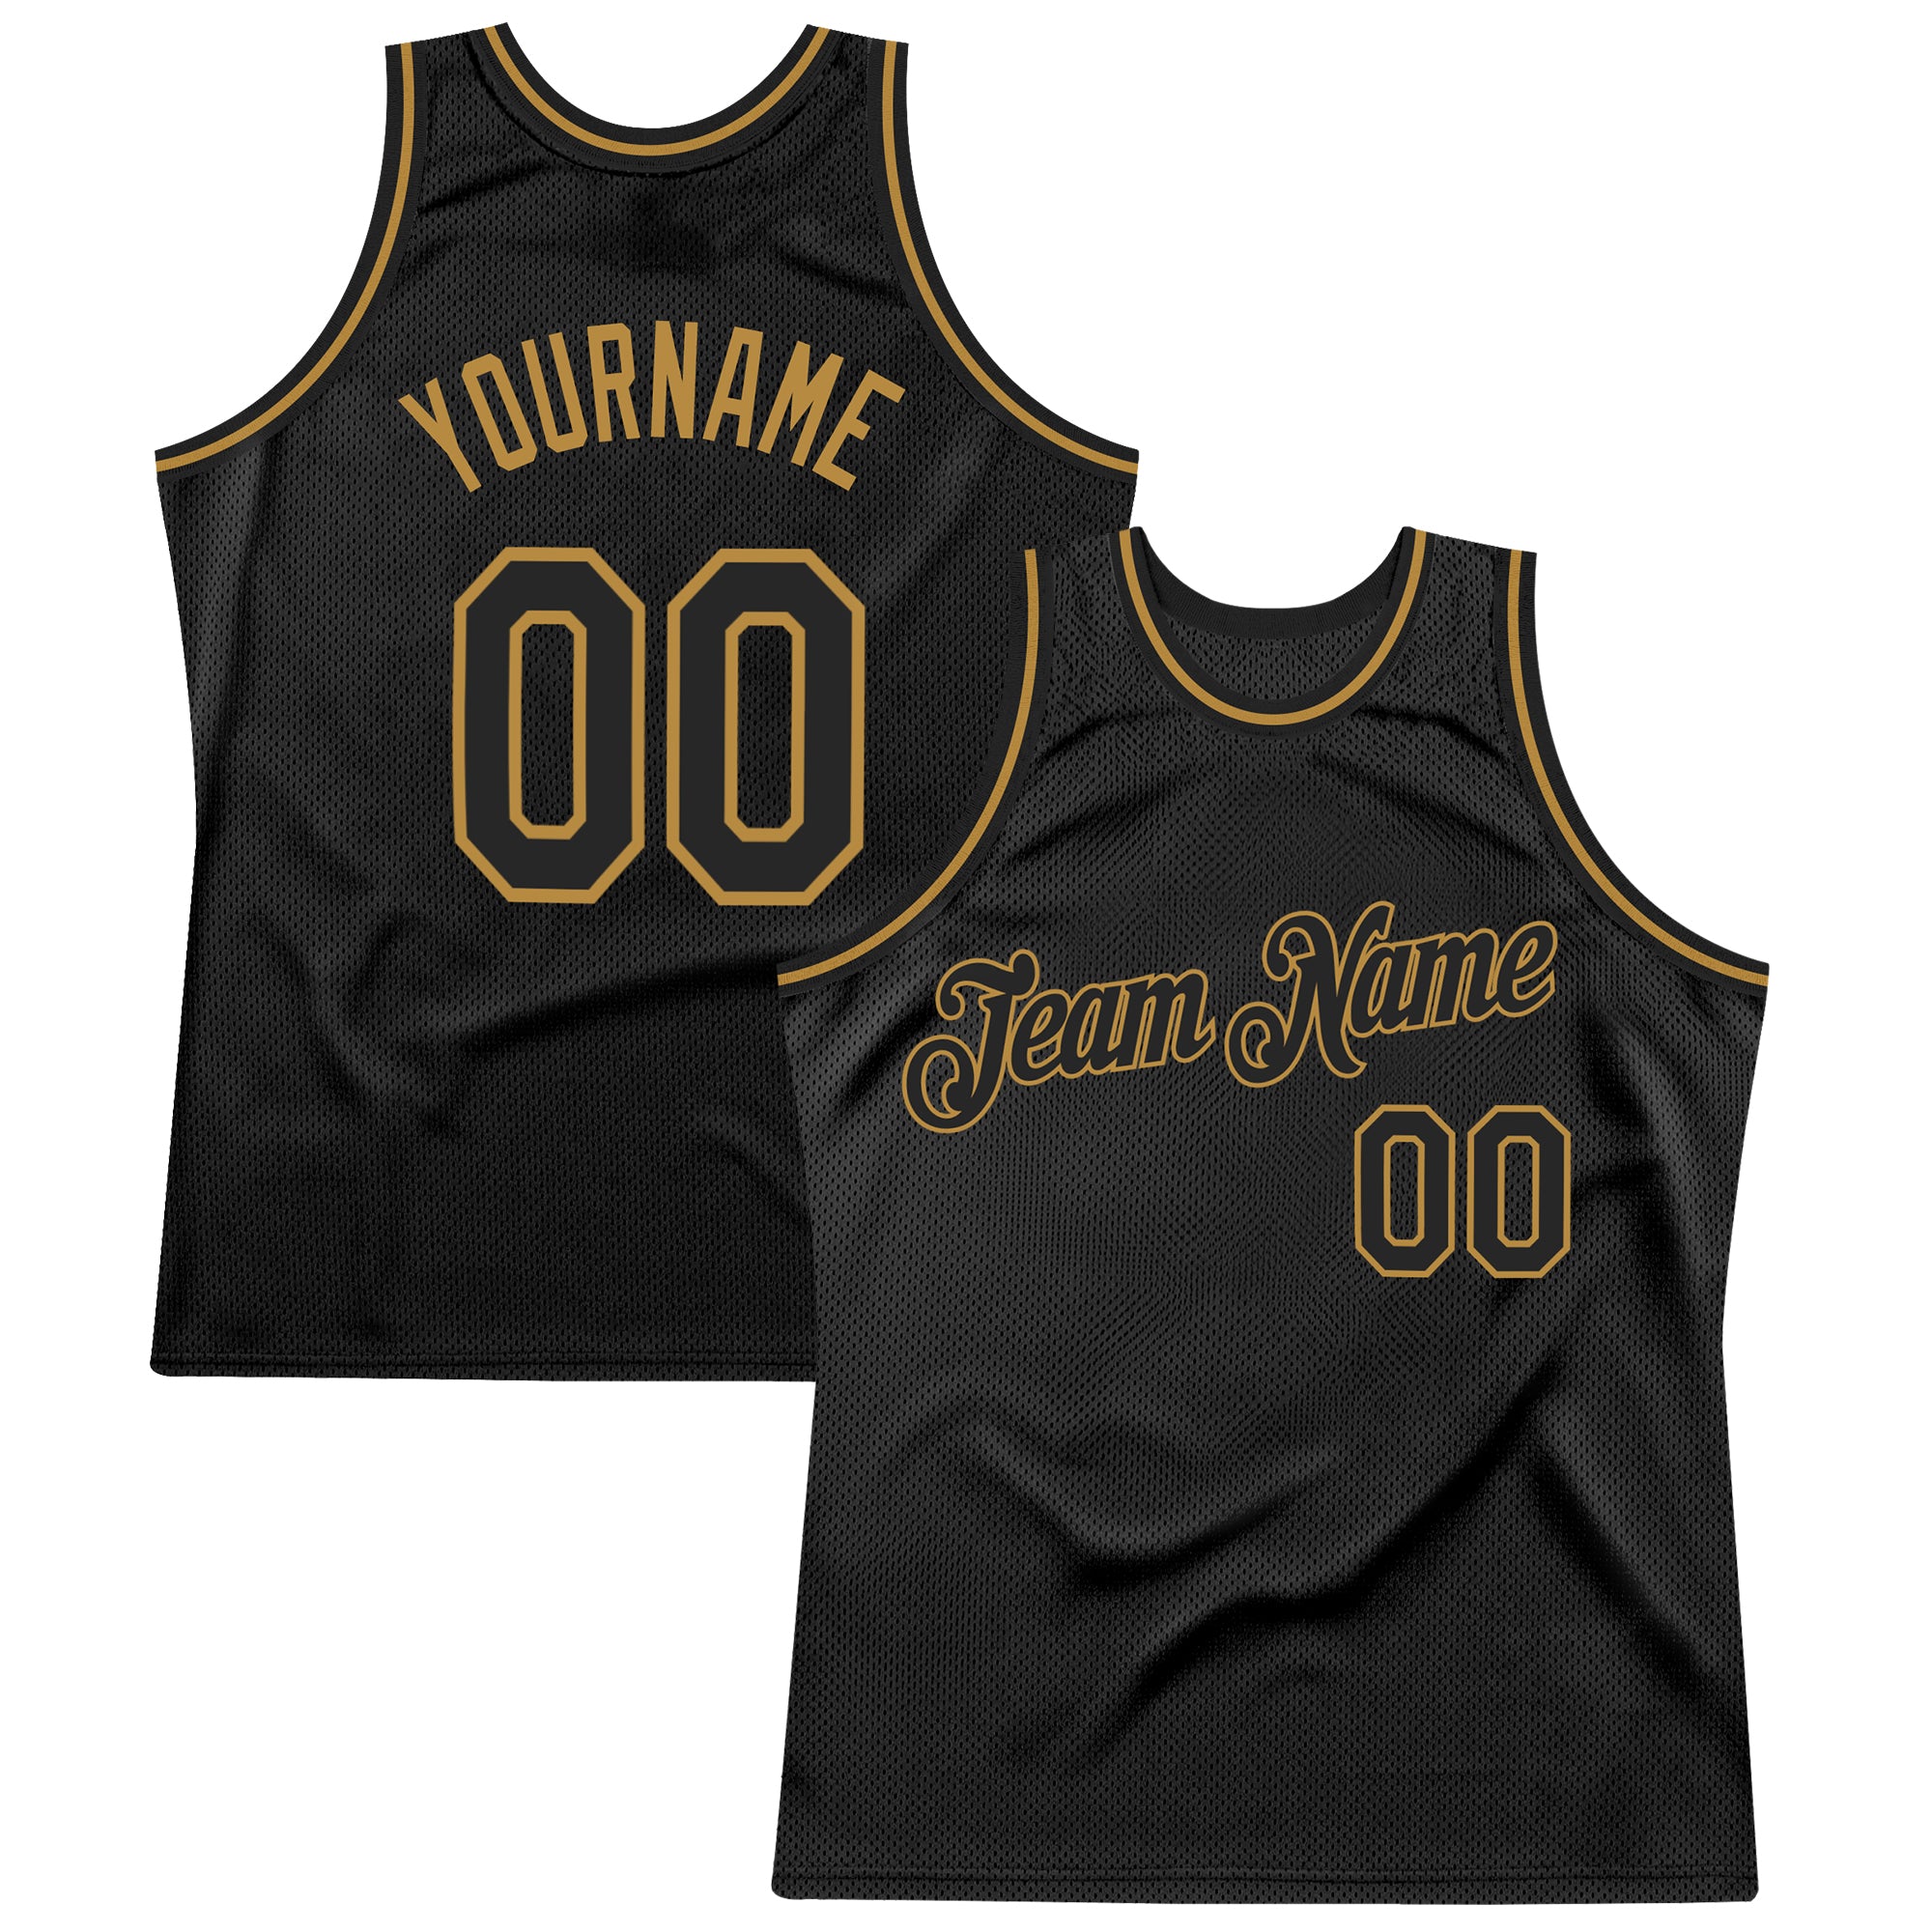 FANSIDEA Custom Black Black-Old Gold Authentic Throwback Basketball Jersey Men's Size:M